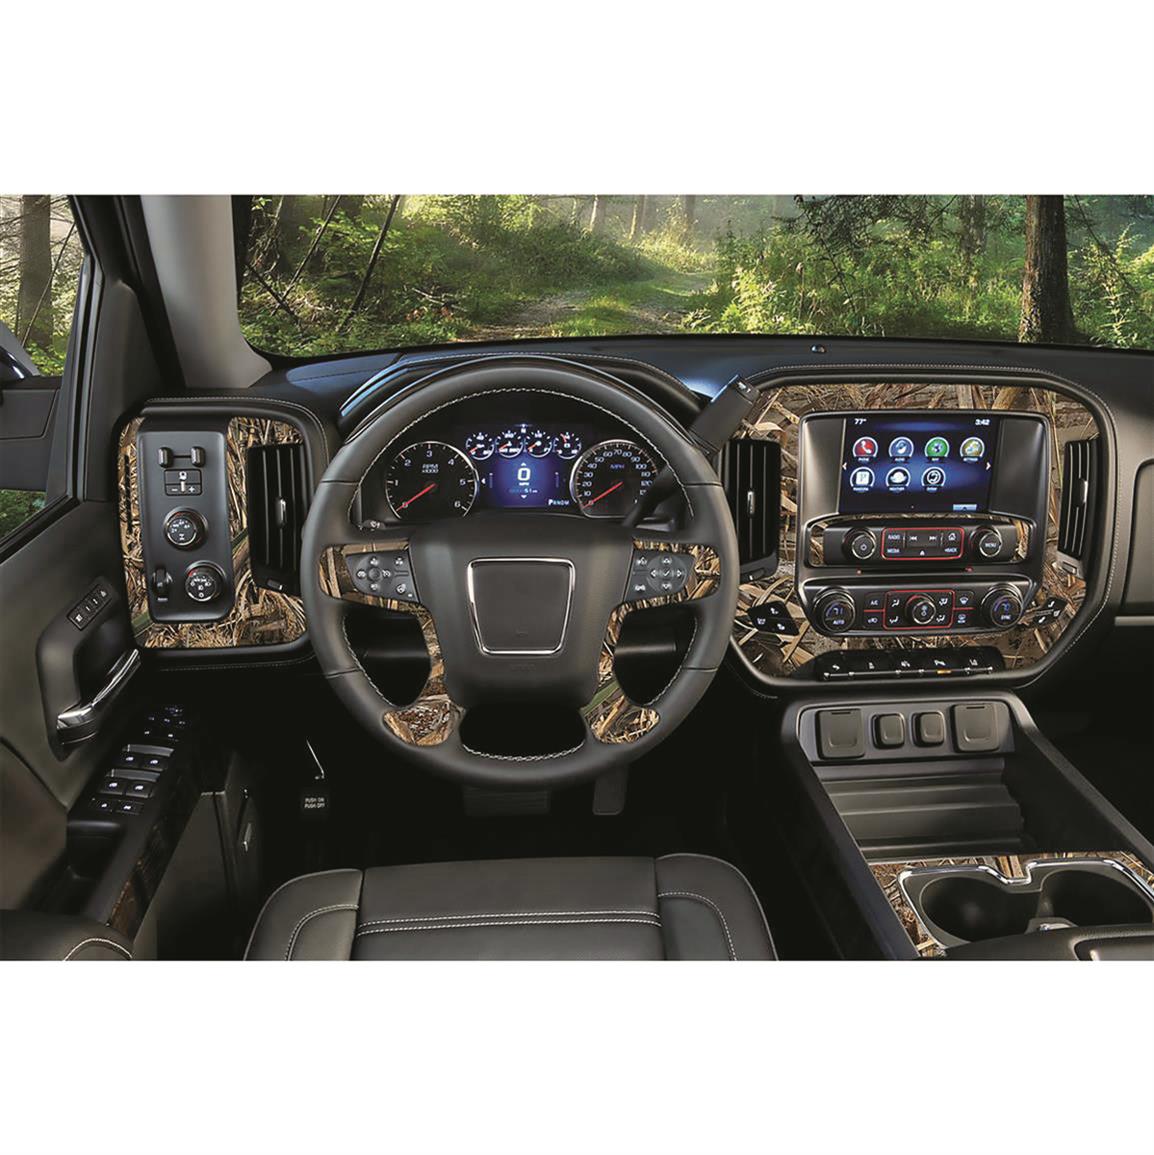 Realtree Camo Graphics Camo Accents Vehicle Interior Kit